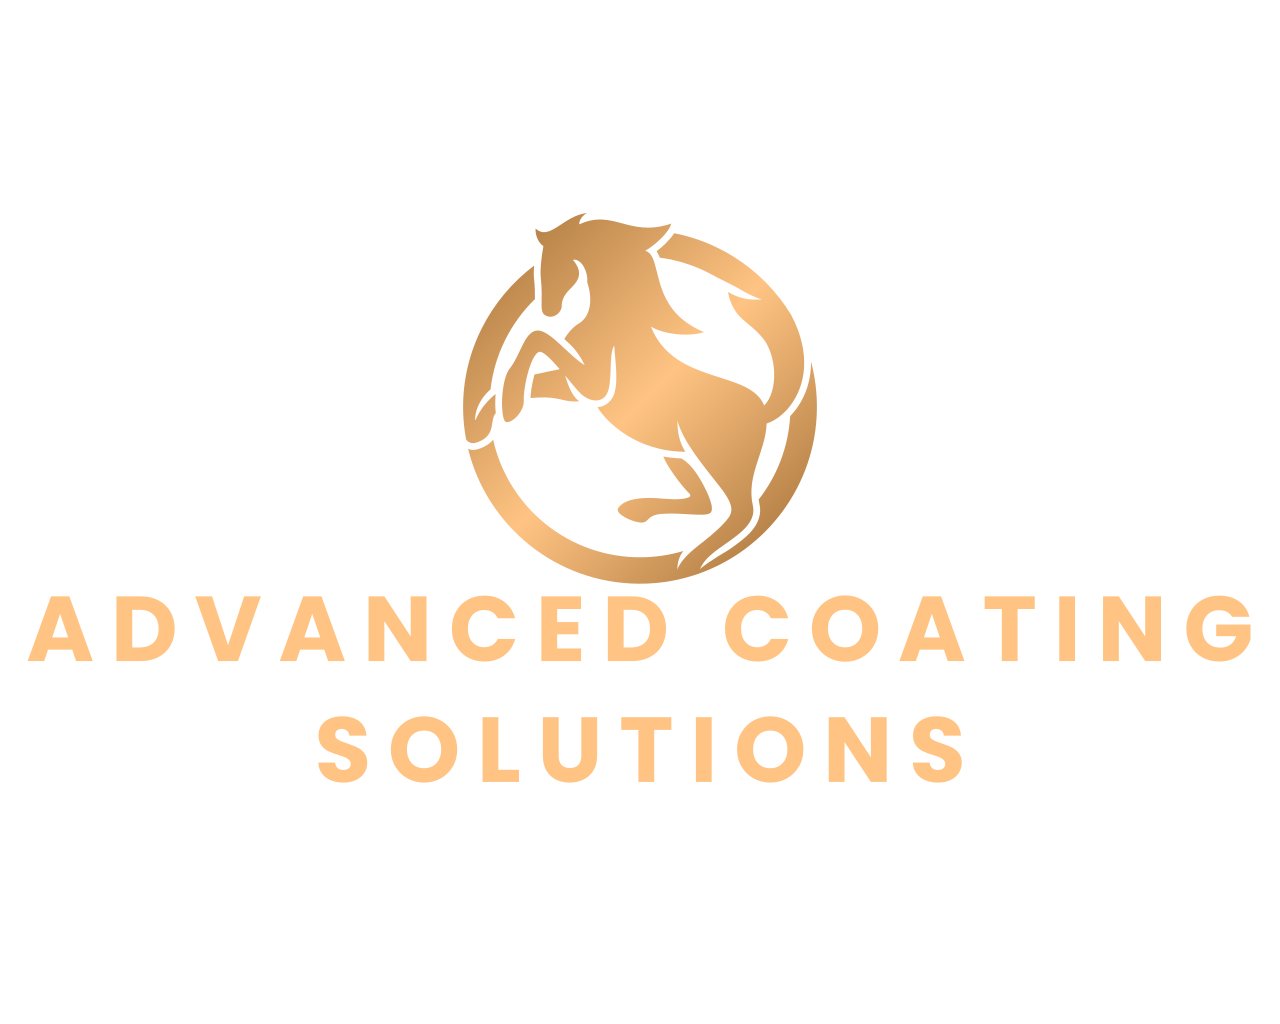 Advanced Coating Solutions - Houston, Texas